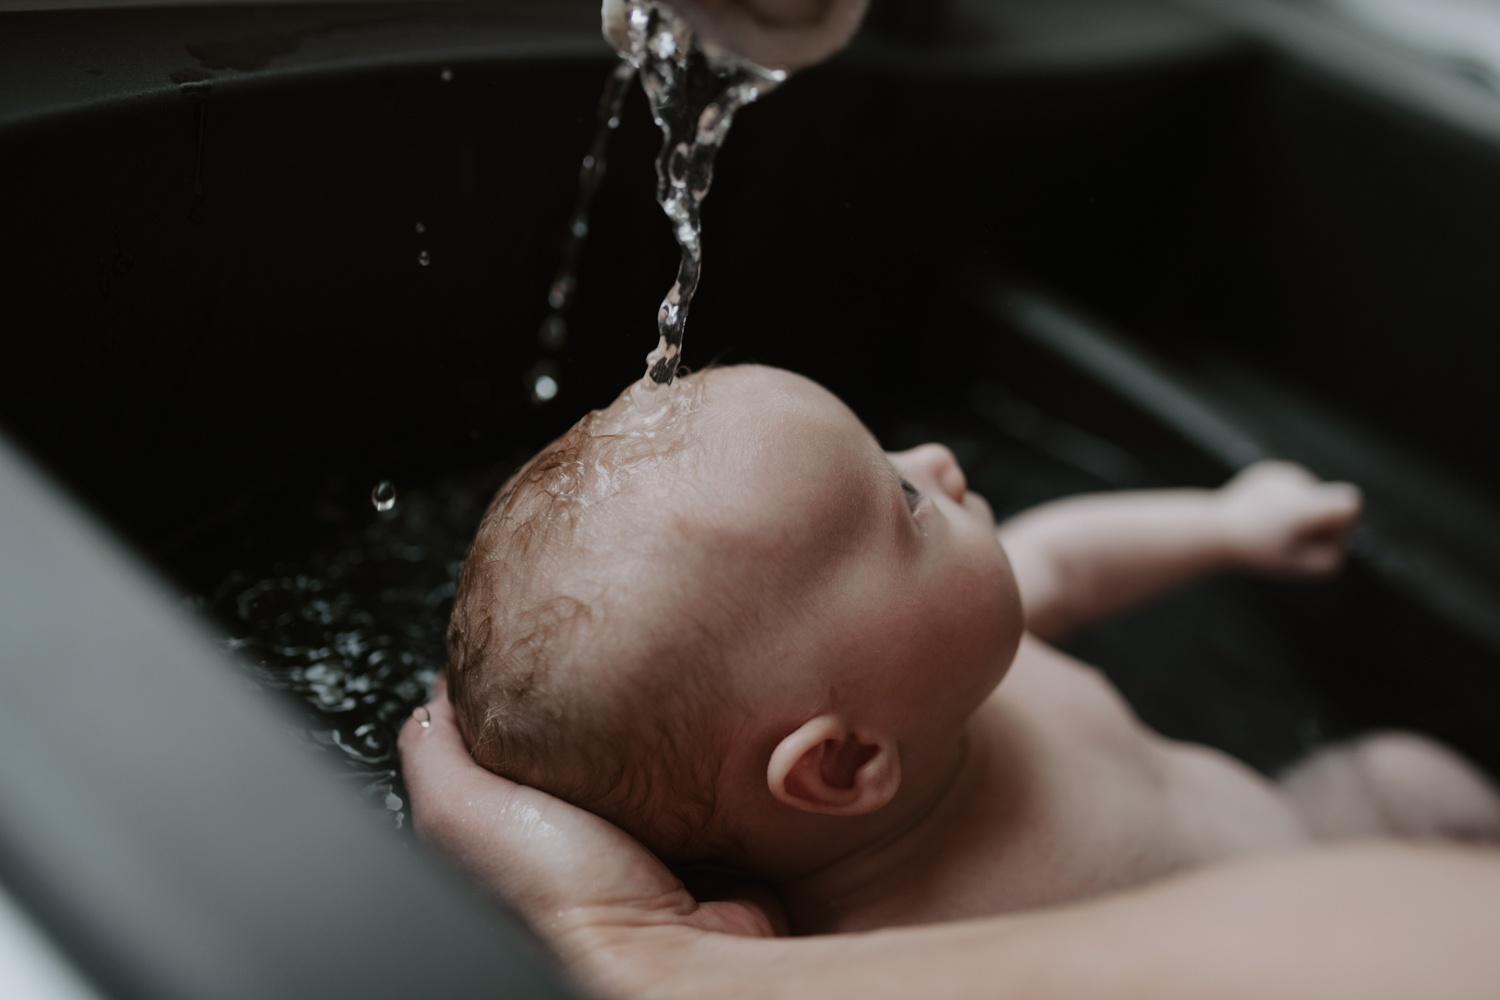 Mother giving newborn baby a bath in a black matte sink